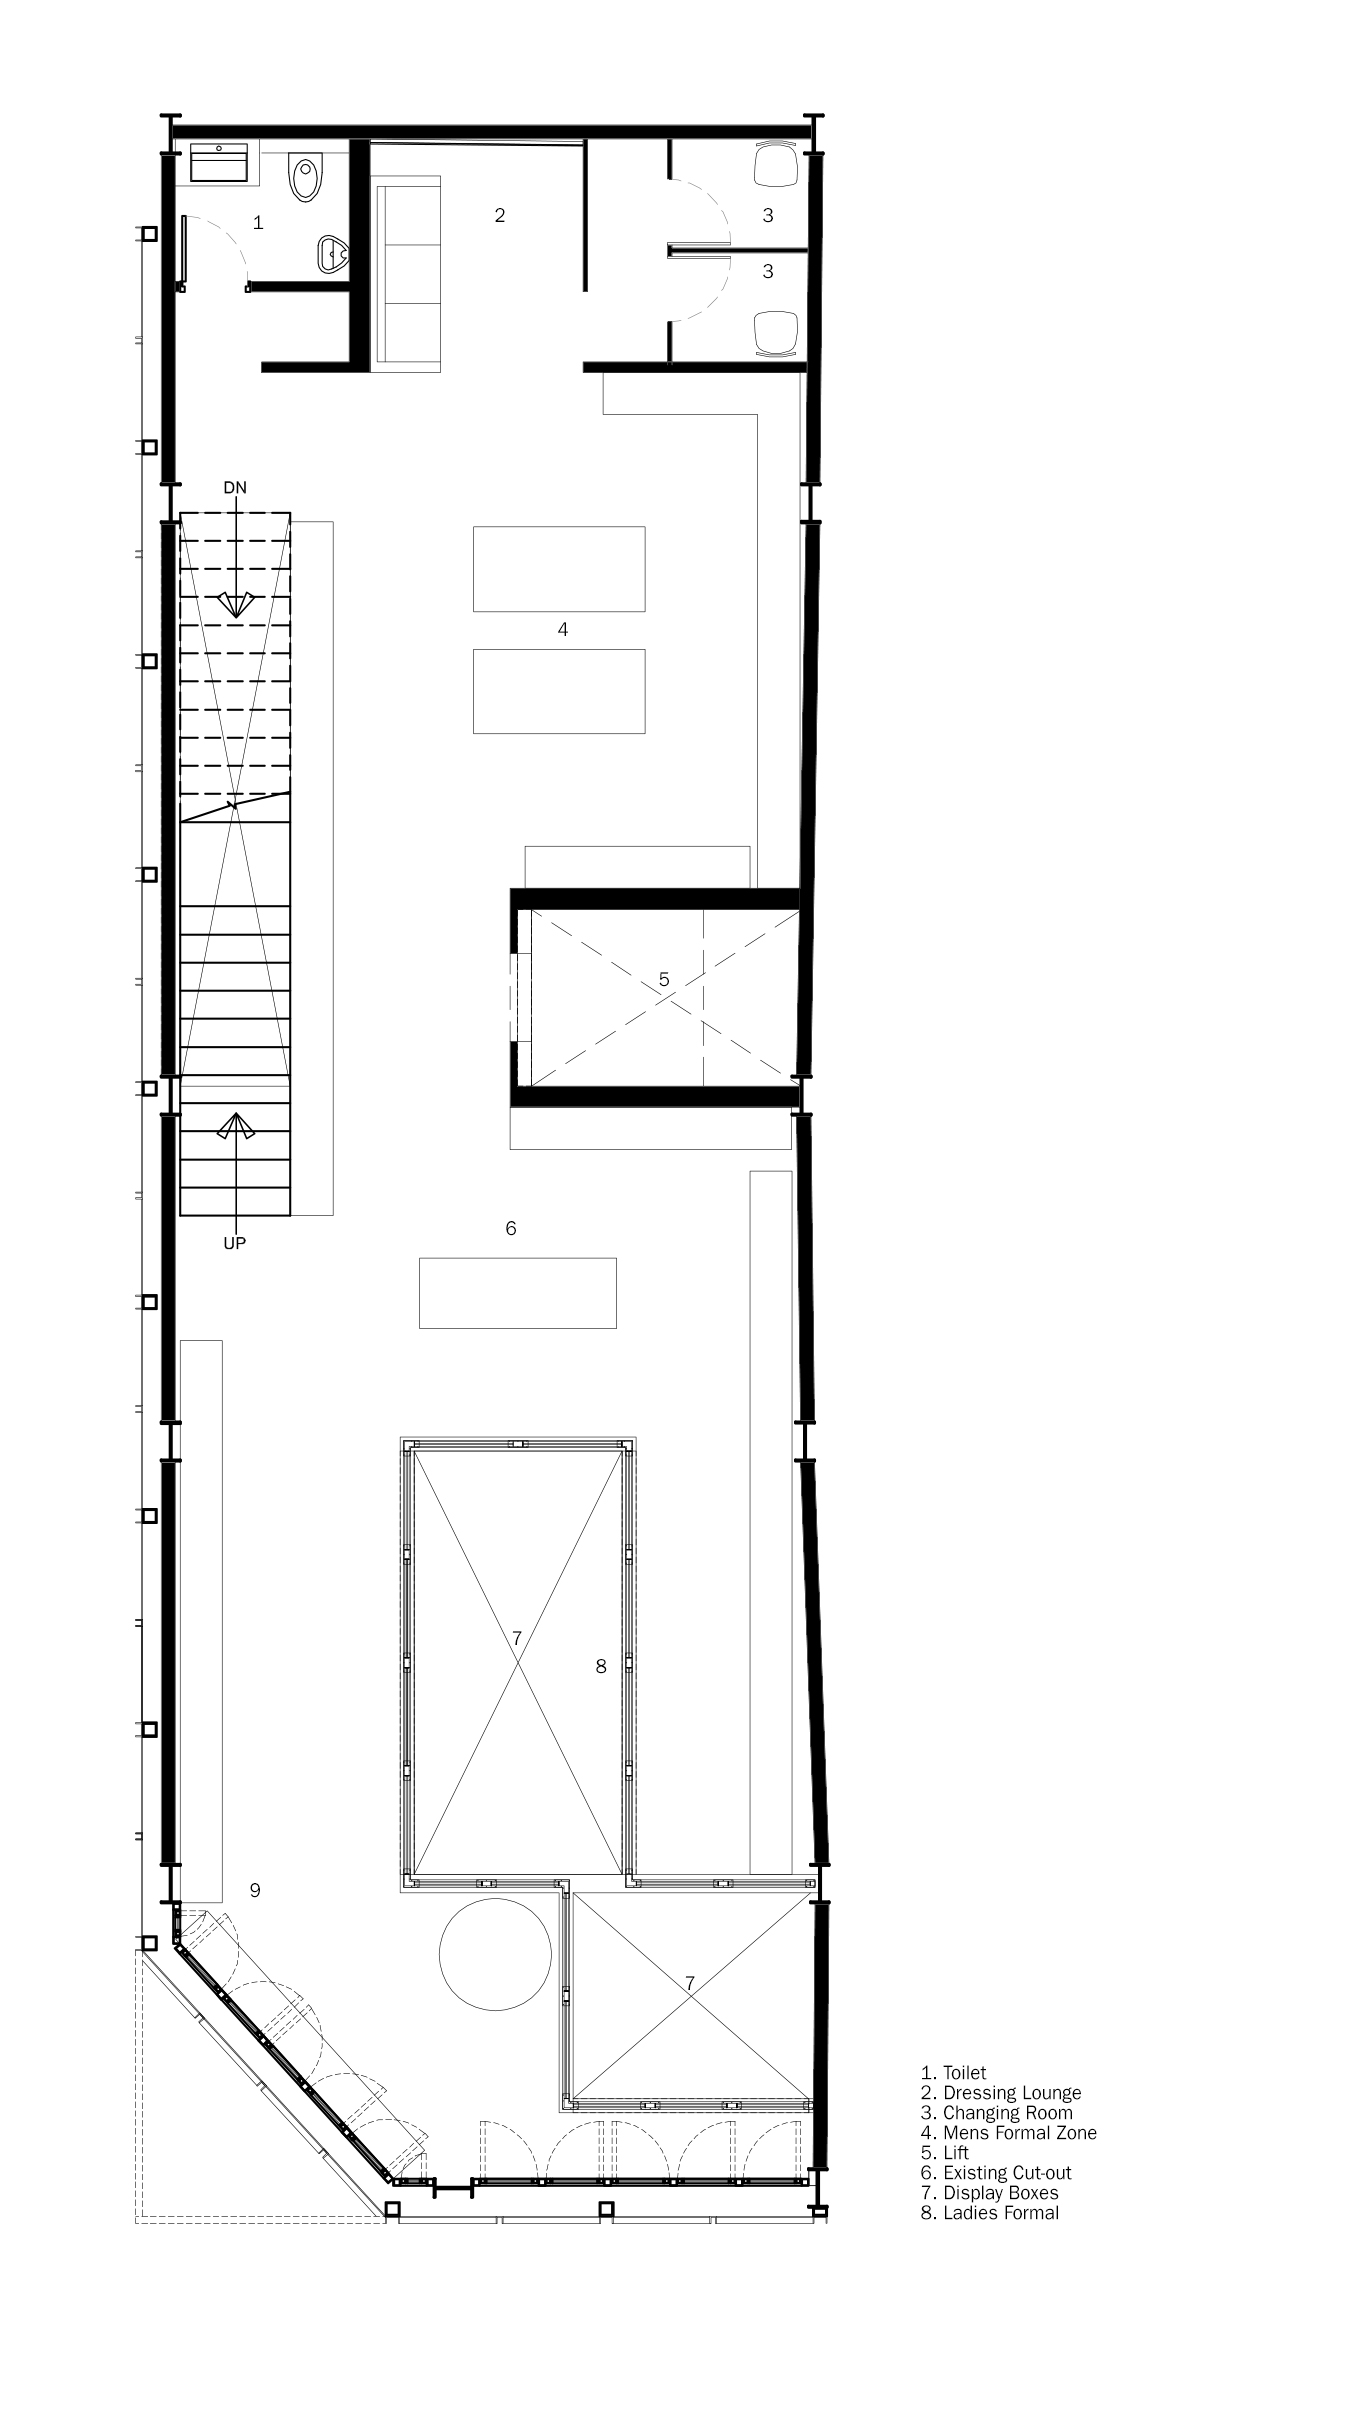 55-1654775952-First floor plan web.jpg